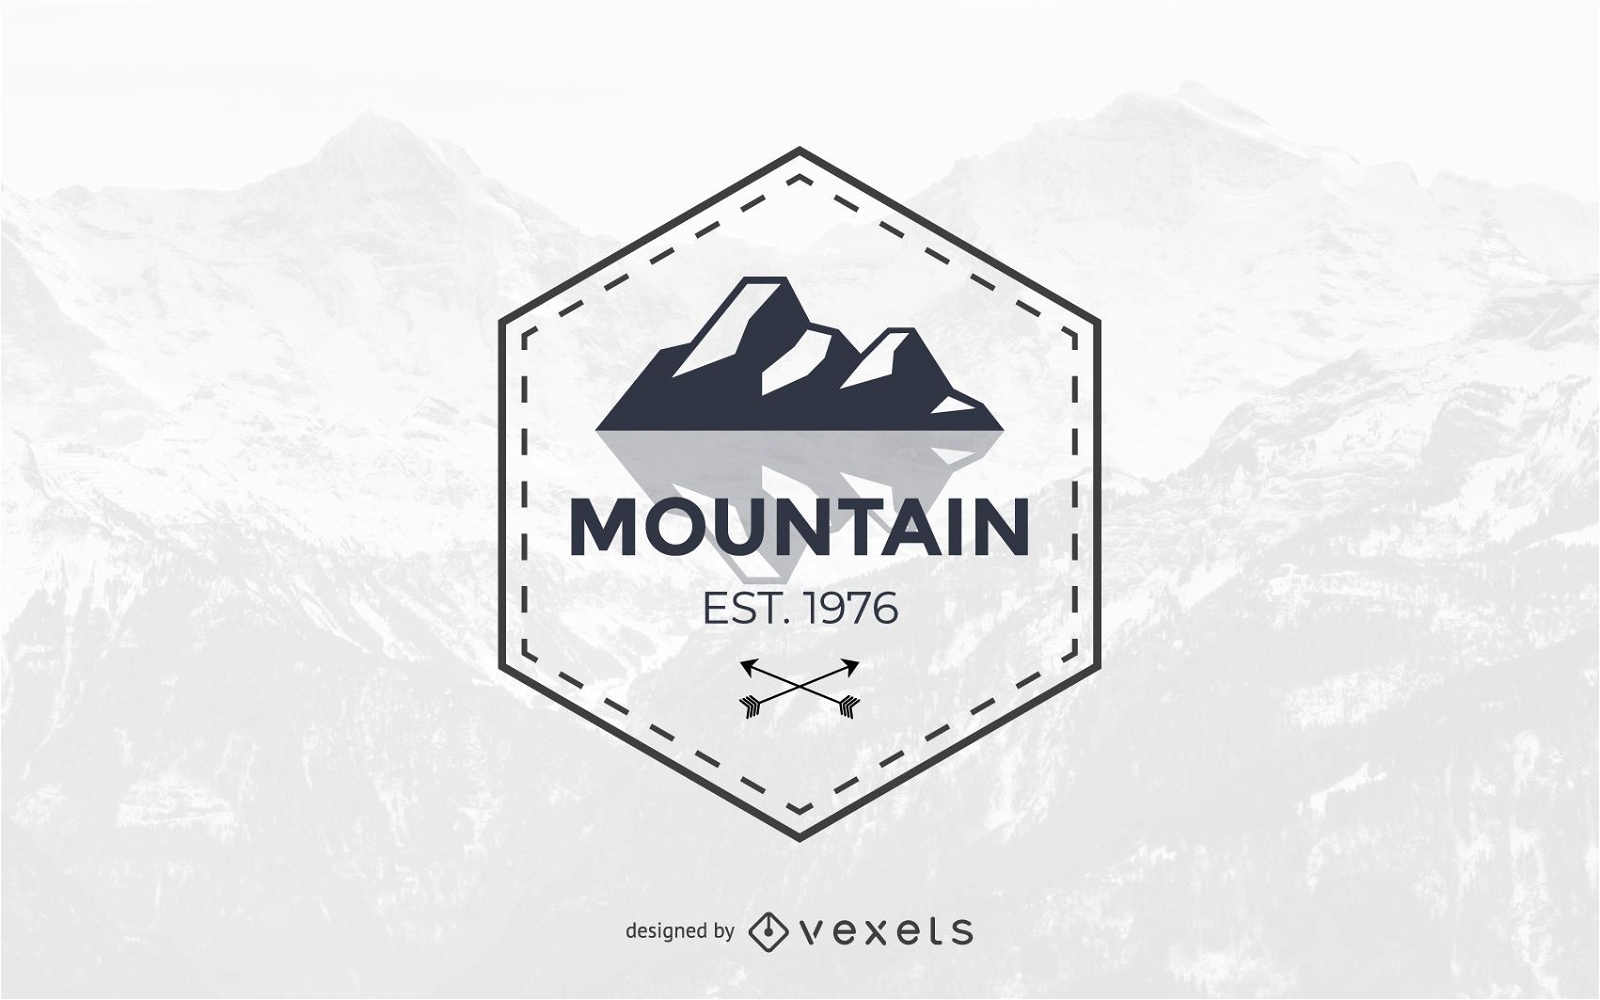 Diseño de plantilla de logotipo de montaña abstracta